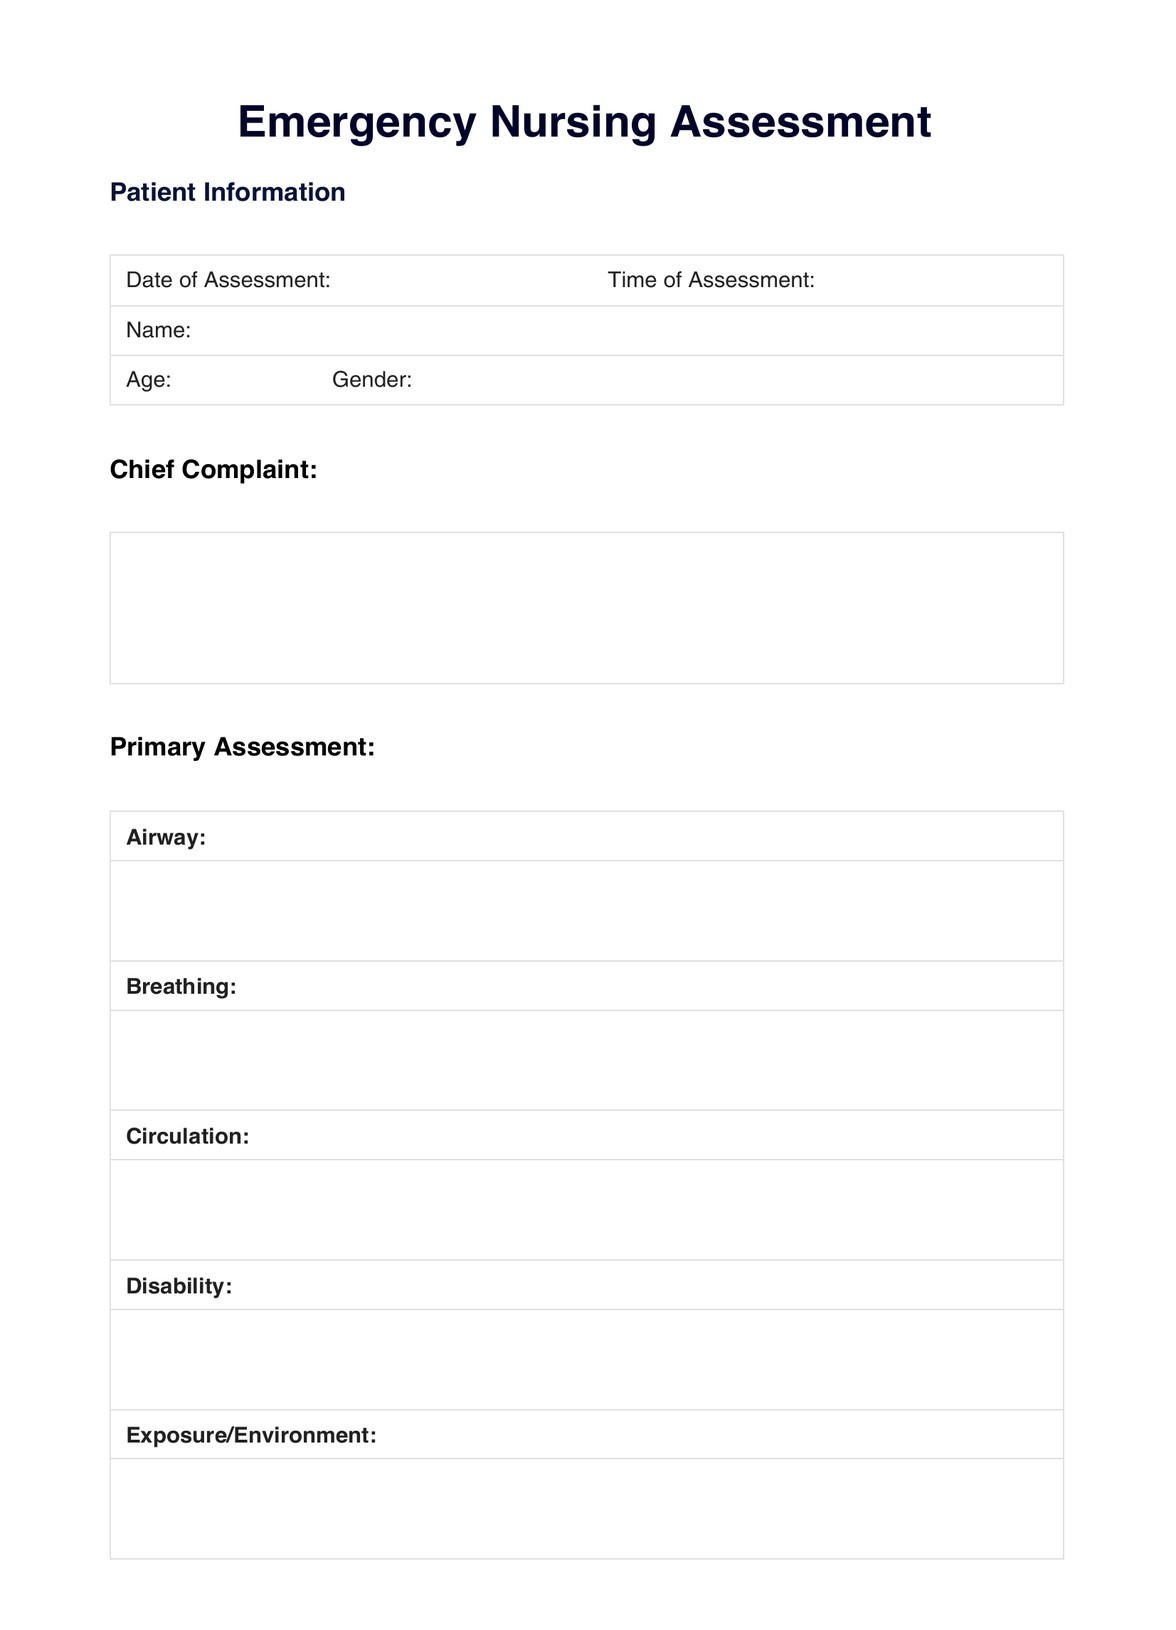 Emergency Nursing Assessment PDF Example